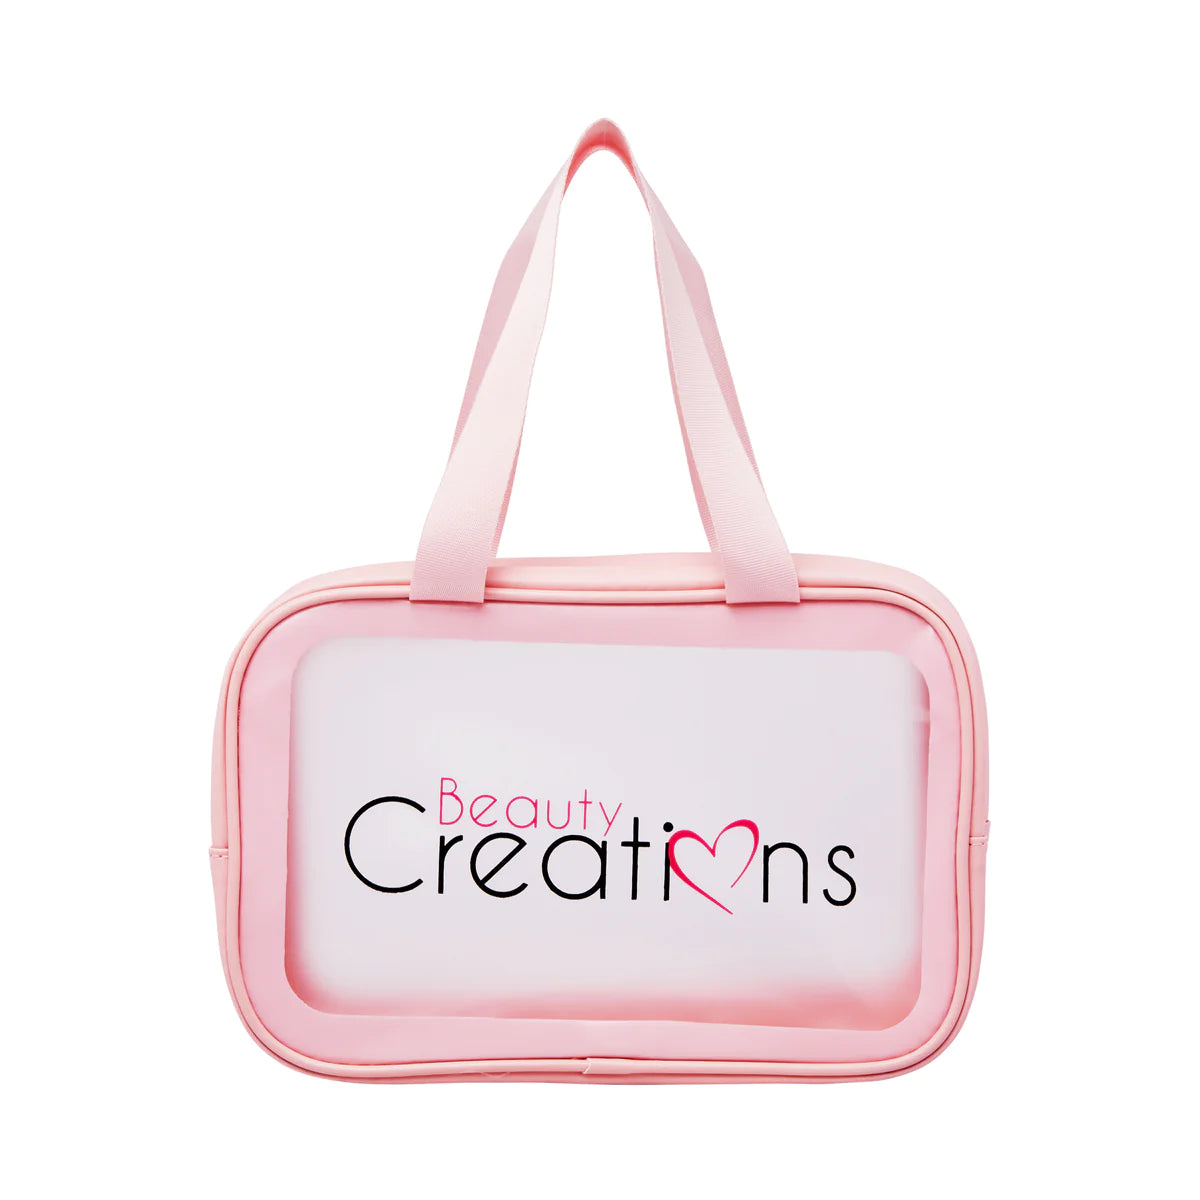 Beauty Creations Bag